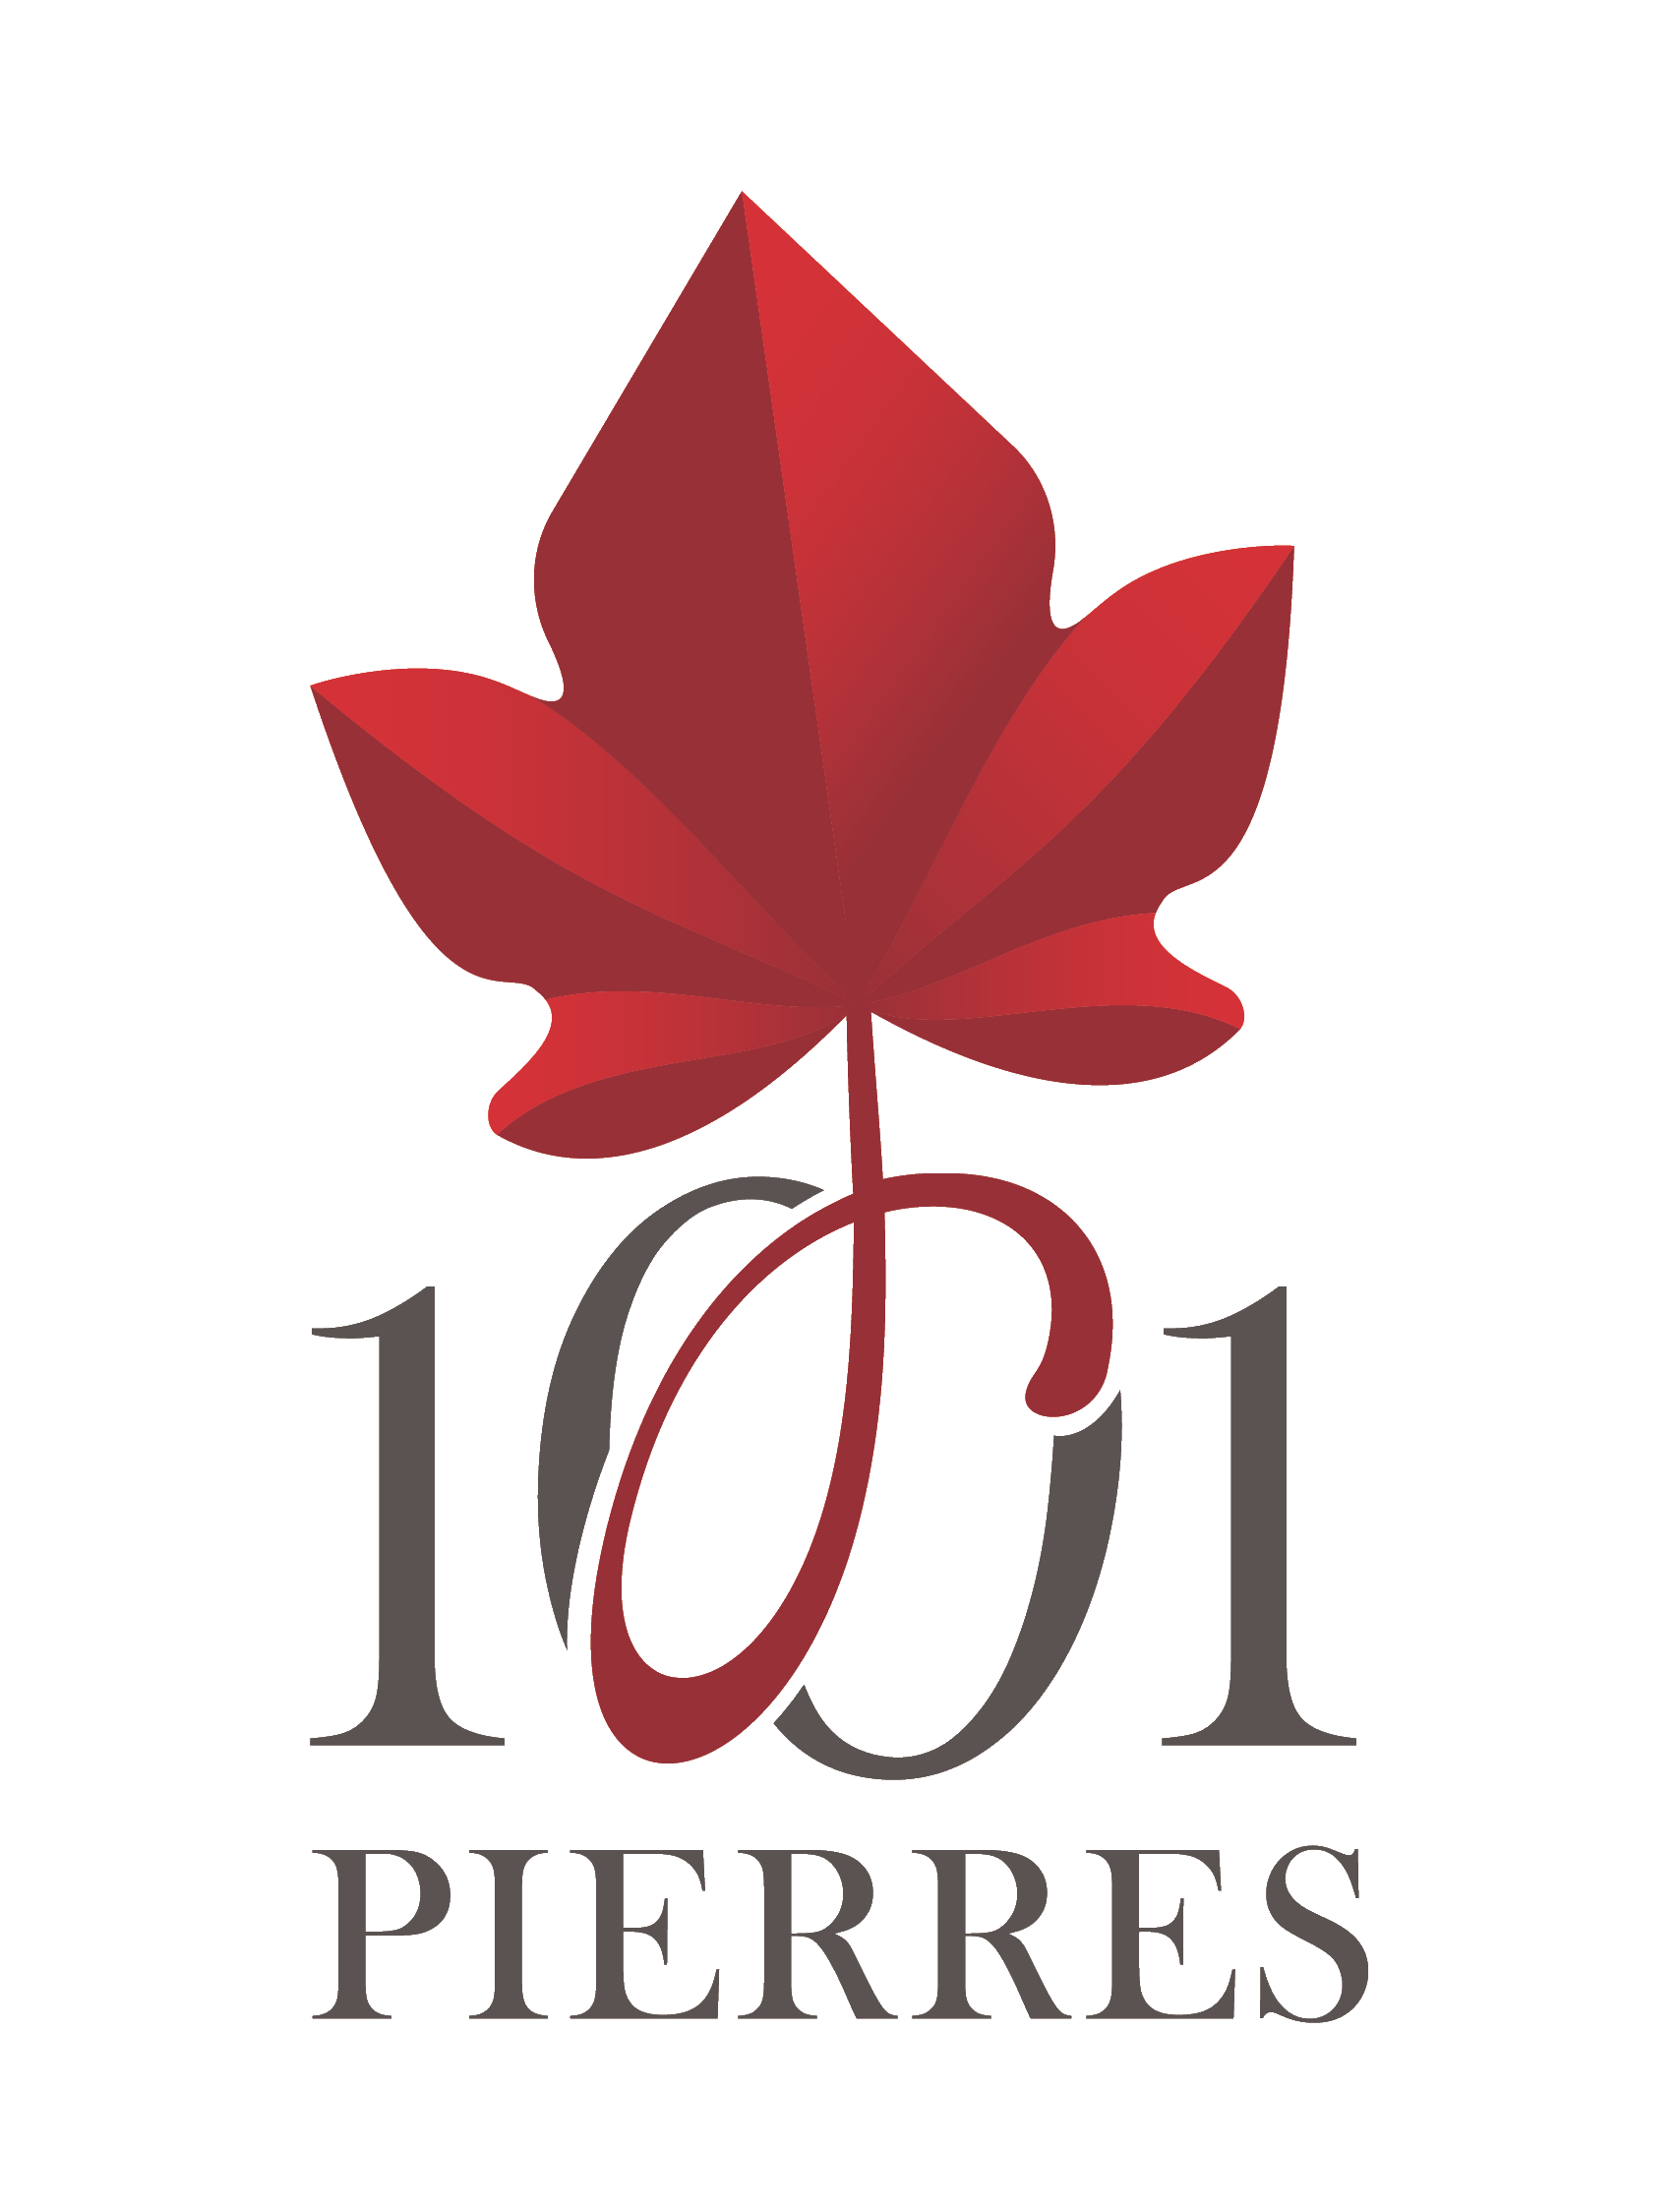 1001 Pierres